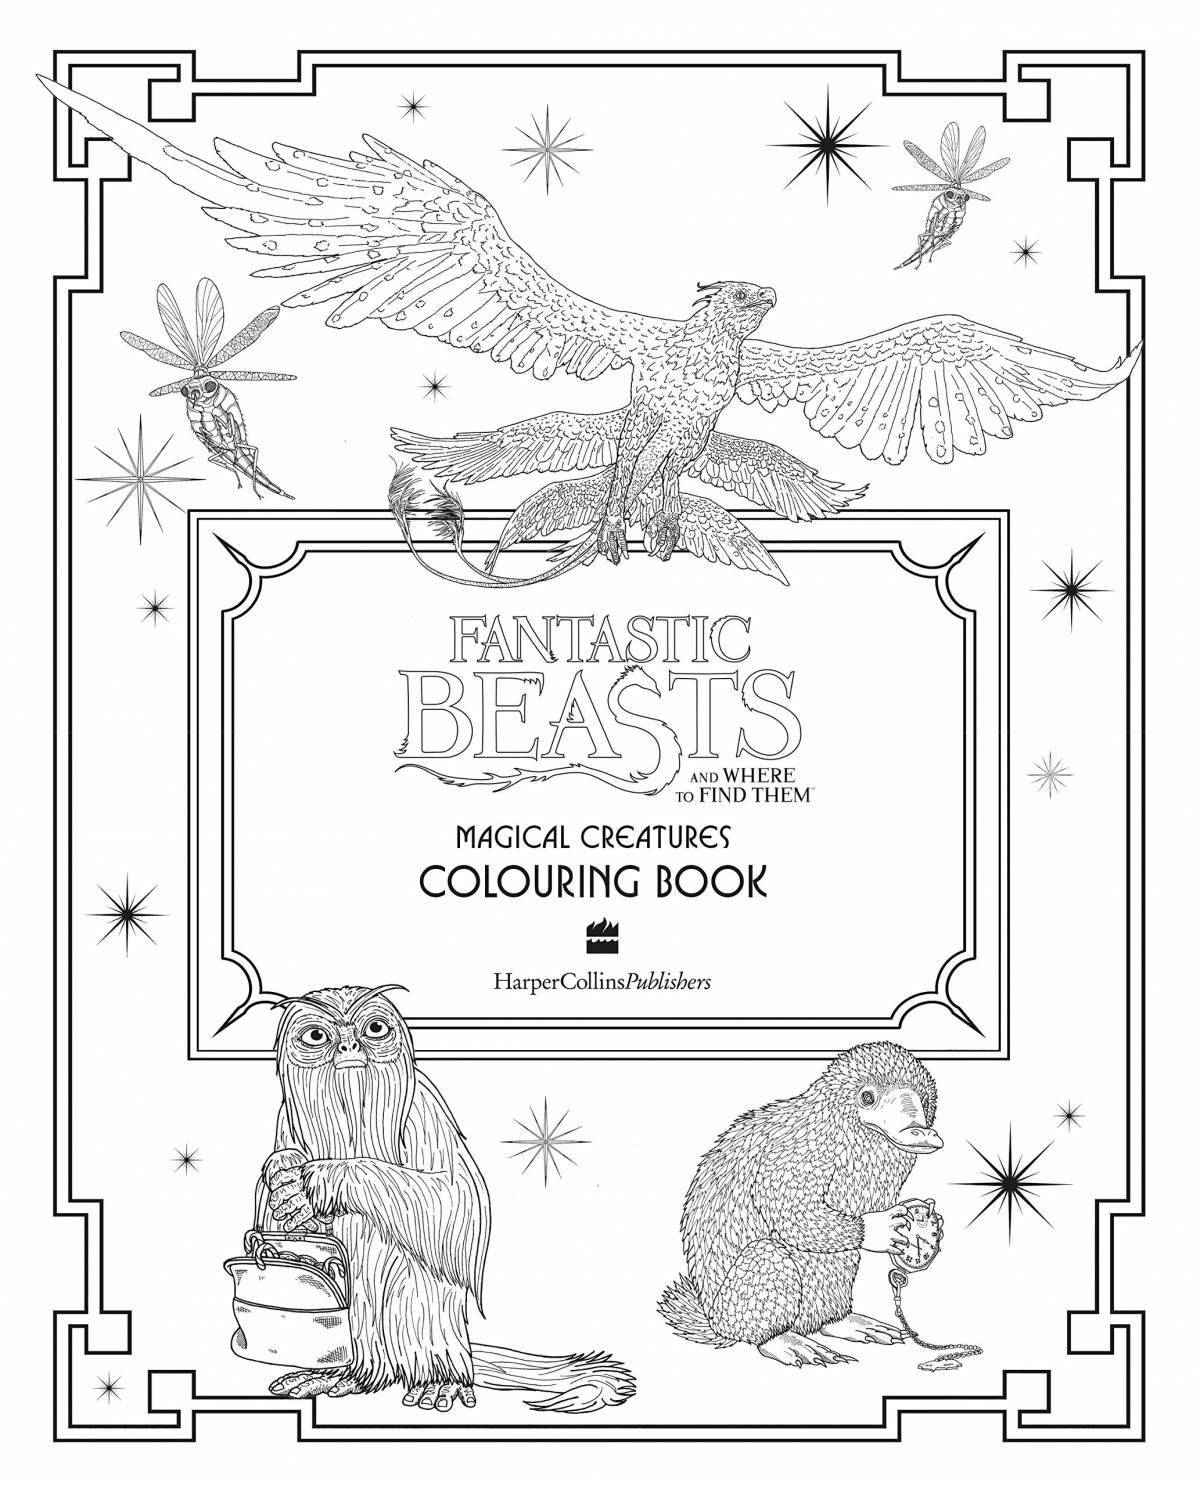 Coloring fantastic beasts - majestic